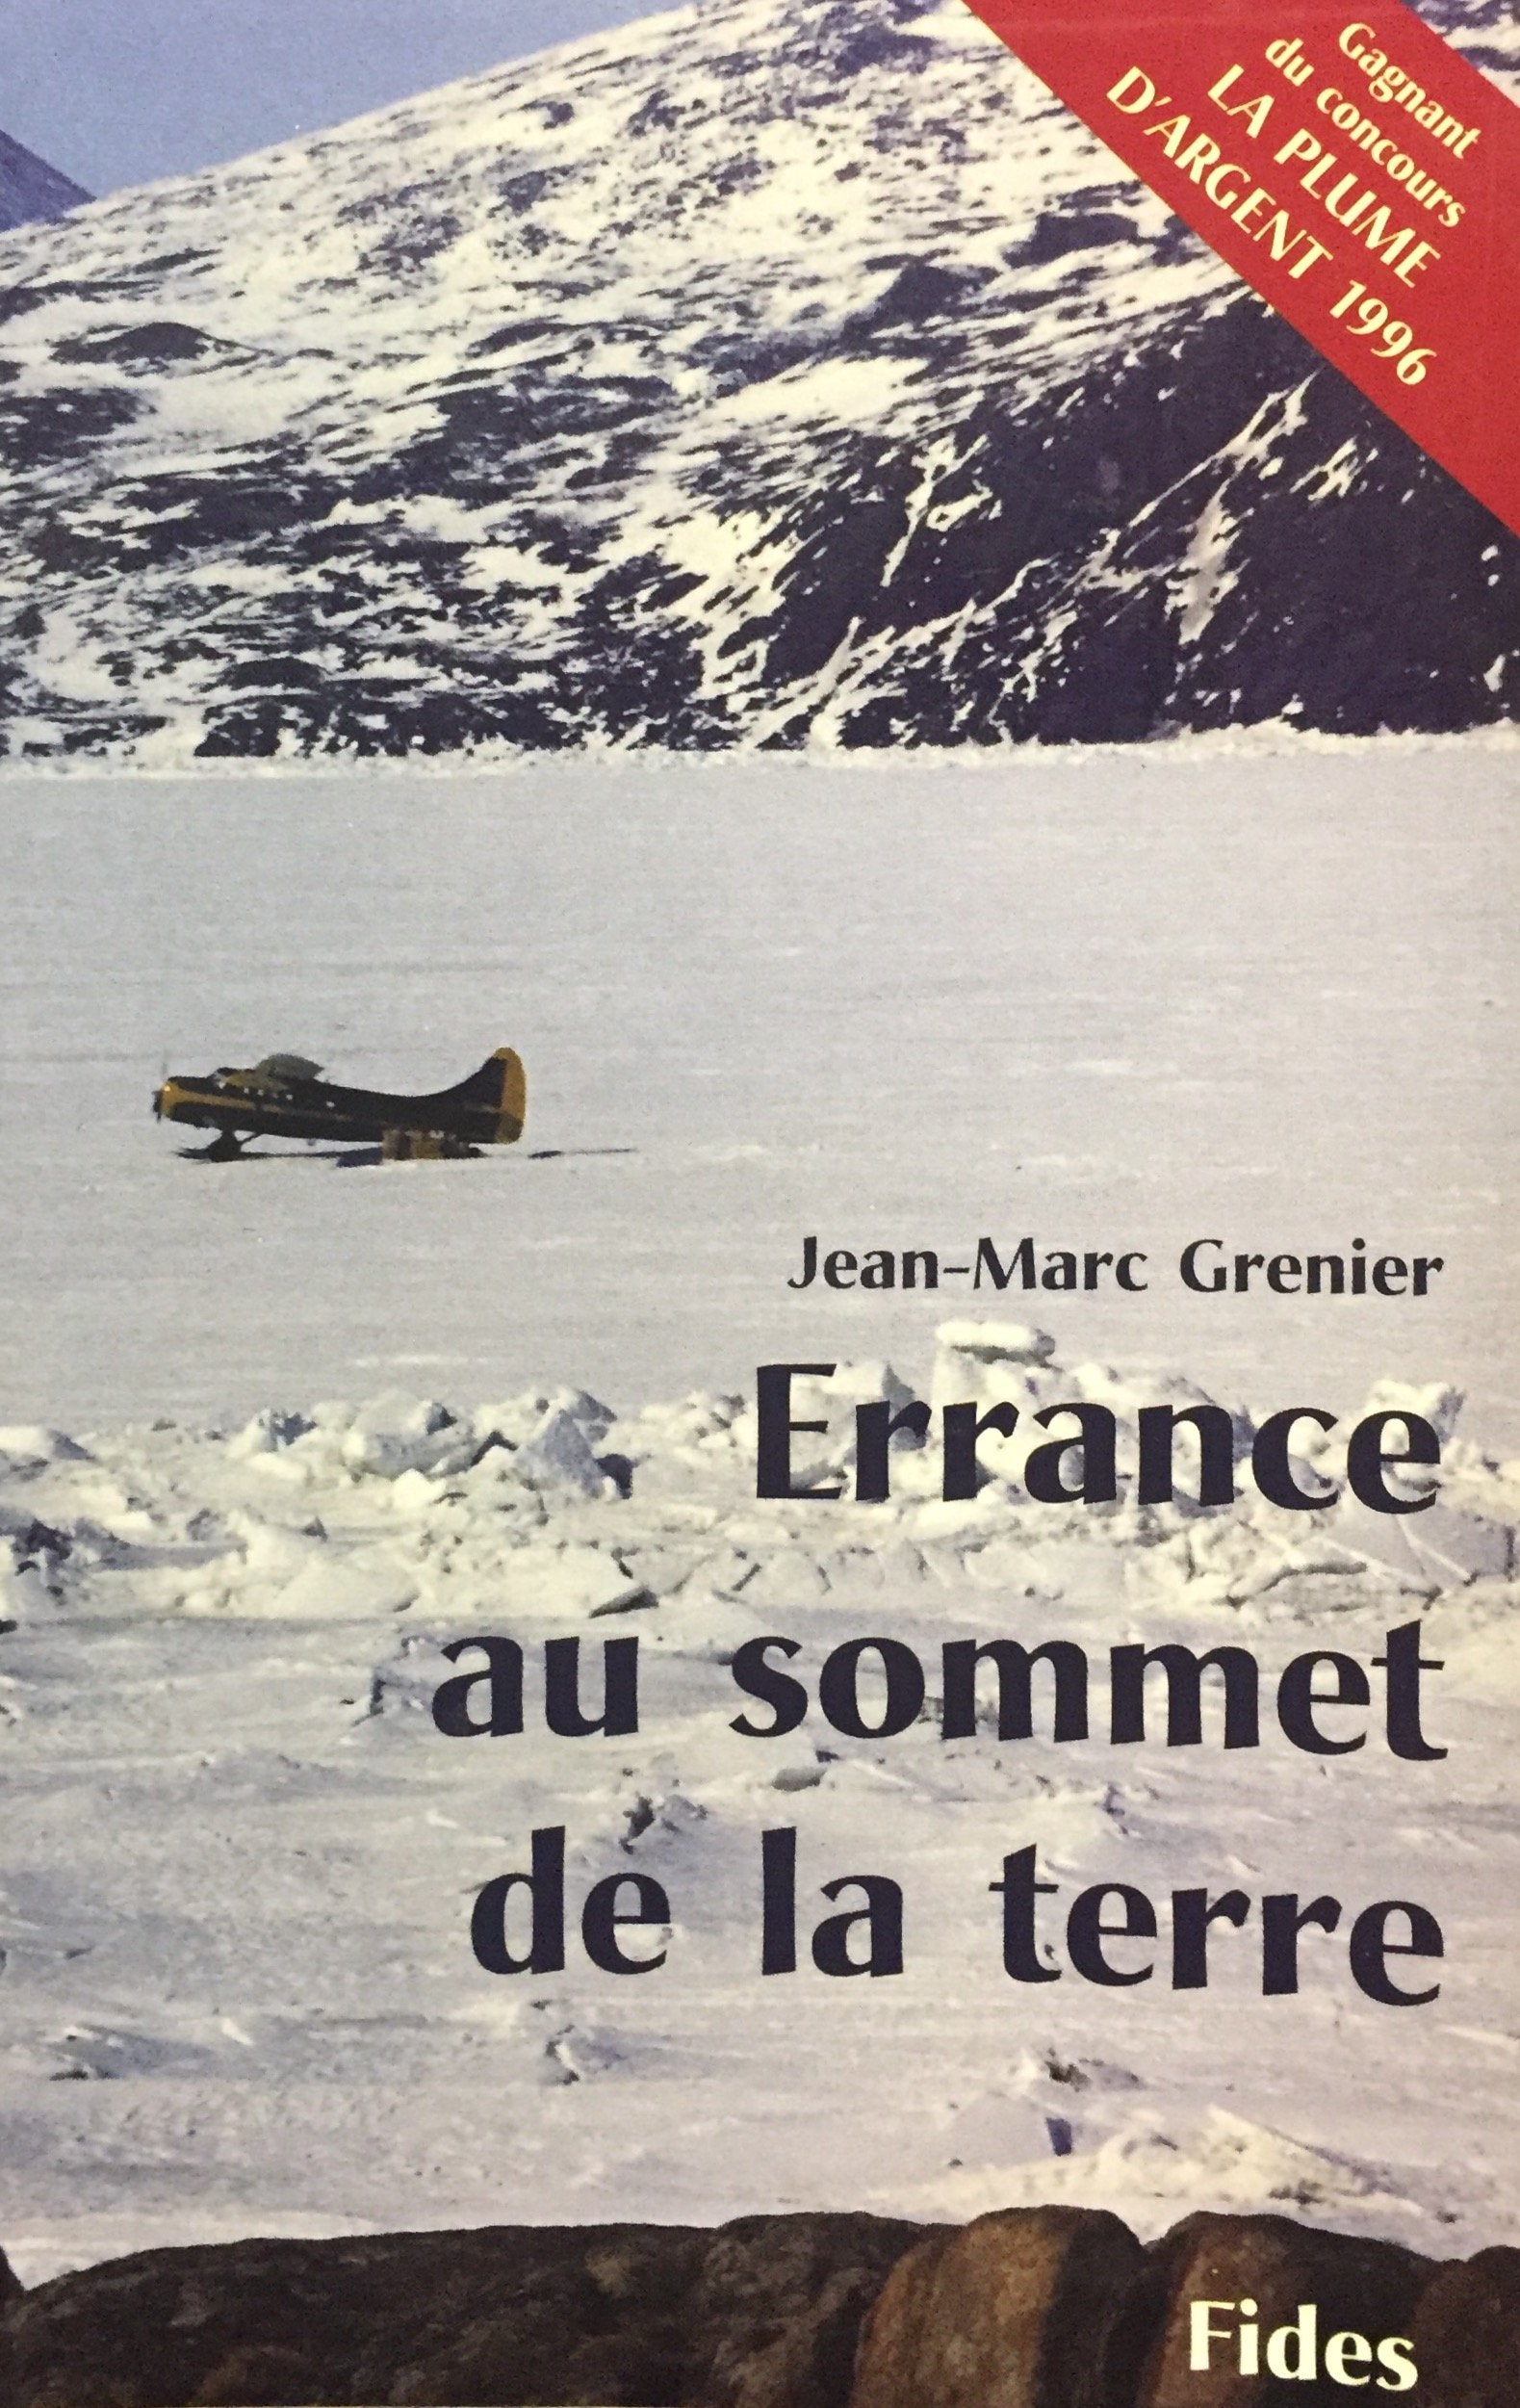 Errance au sommet de la terre - Jean-Marc Grenier